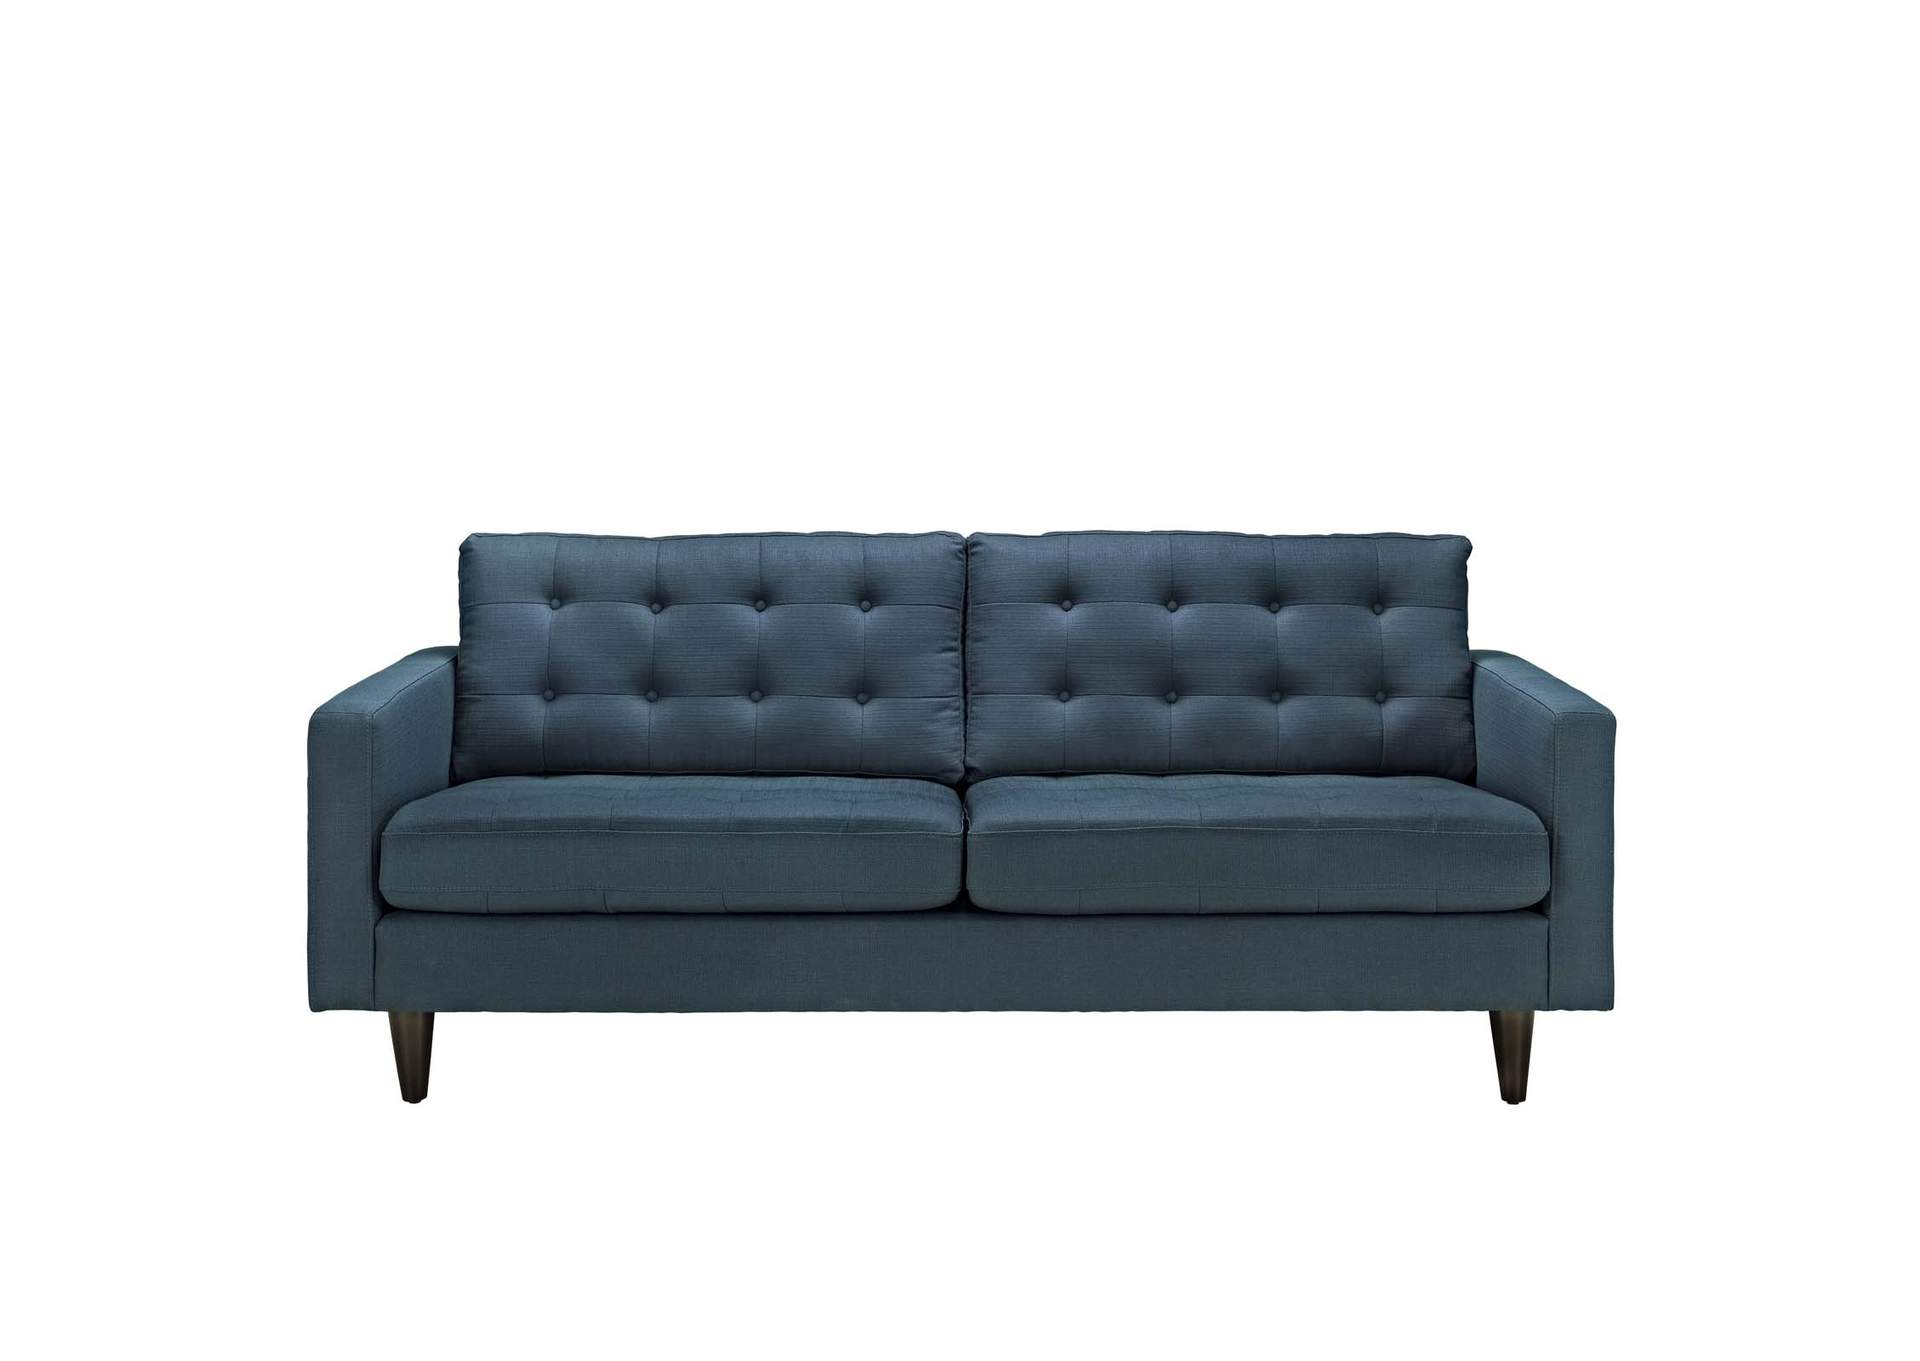 Azure Empress Upholstered Fabric Sofa,Modway